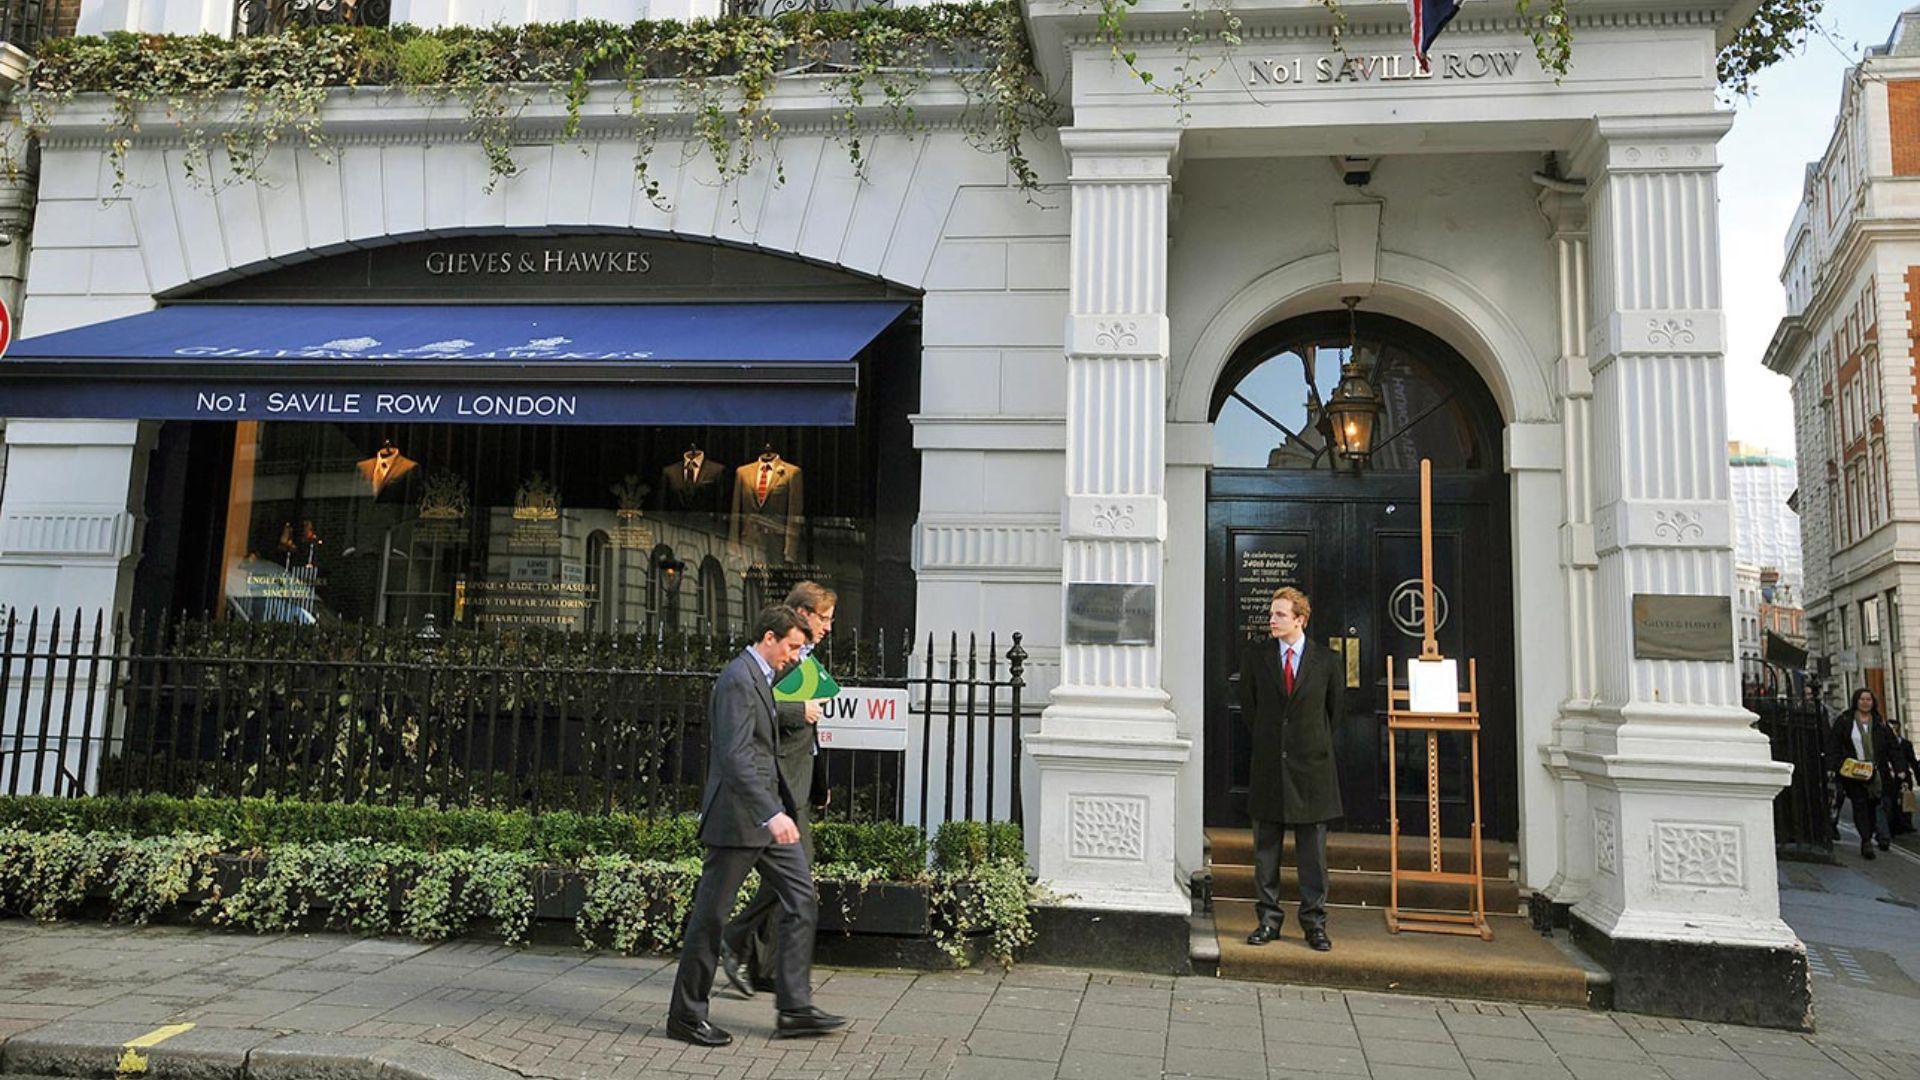 Louis Vuitton Selfridges London Contact Numbered List